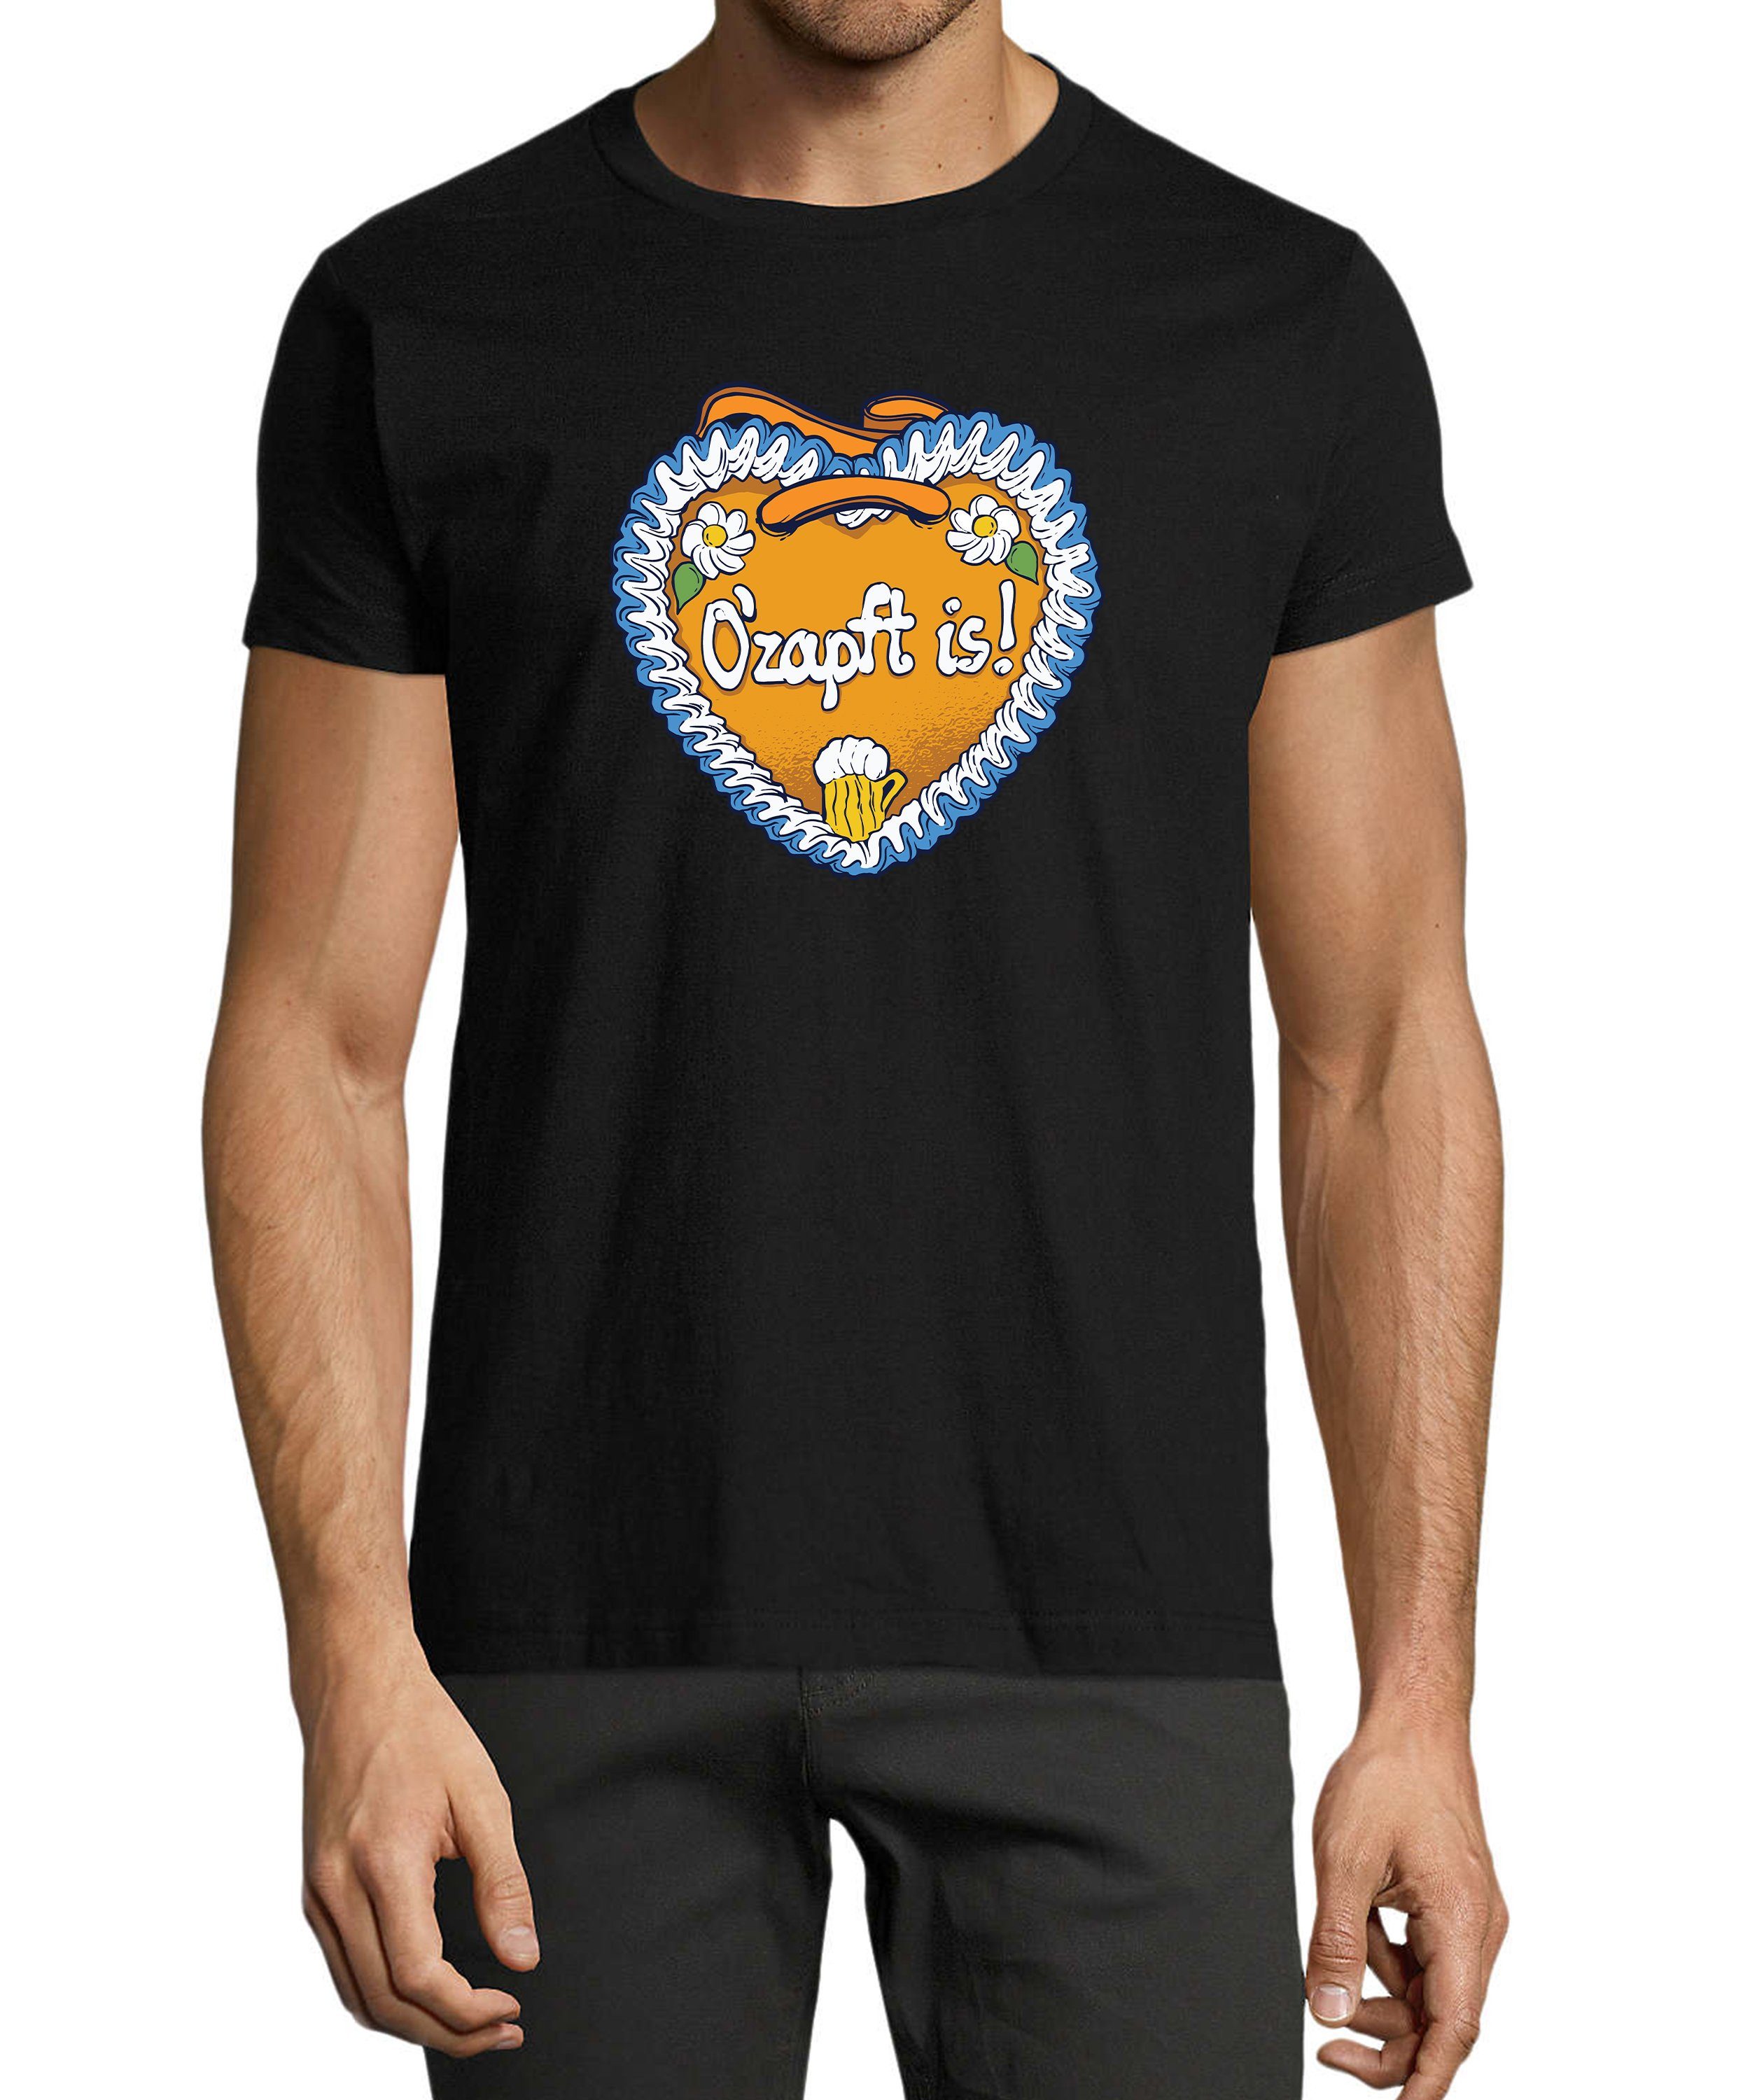 MyDesign24 T-Shirt Herren Fun Print Shirt - Trinkshirt O'Zapft is Baumwollshirt mit Aufdruck Regular Fit, i313 schwarz